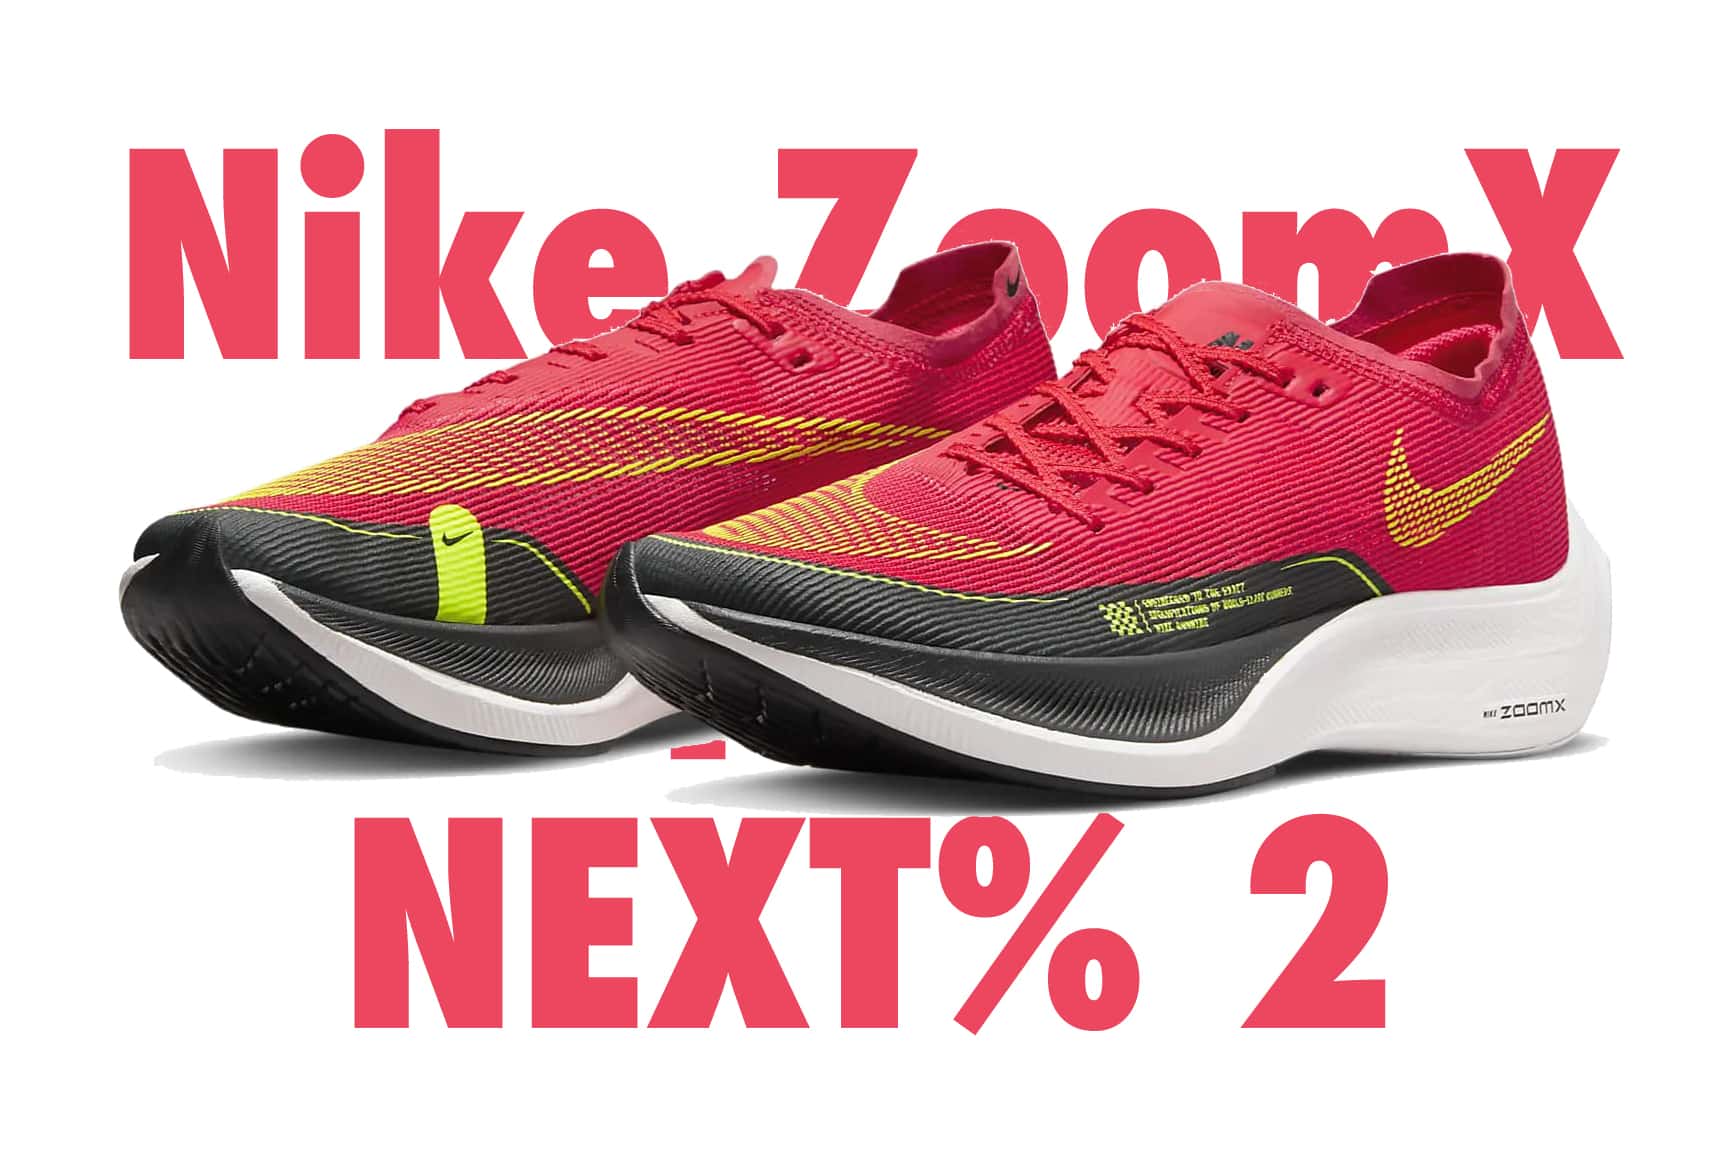 Nike ZoomX Vaporfly NEXT% 2 สีใหม่ สีแดง "Siren Red" วางจำหน่าย